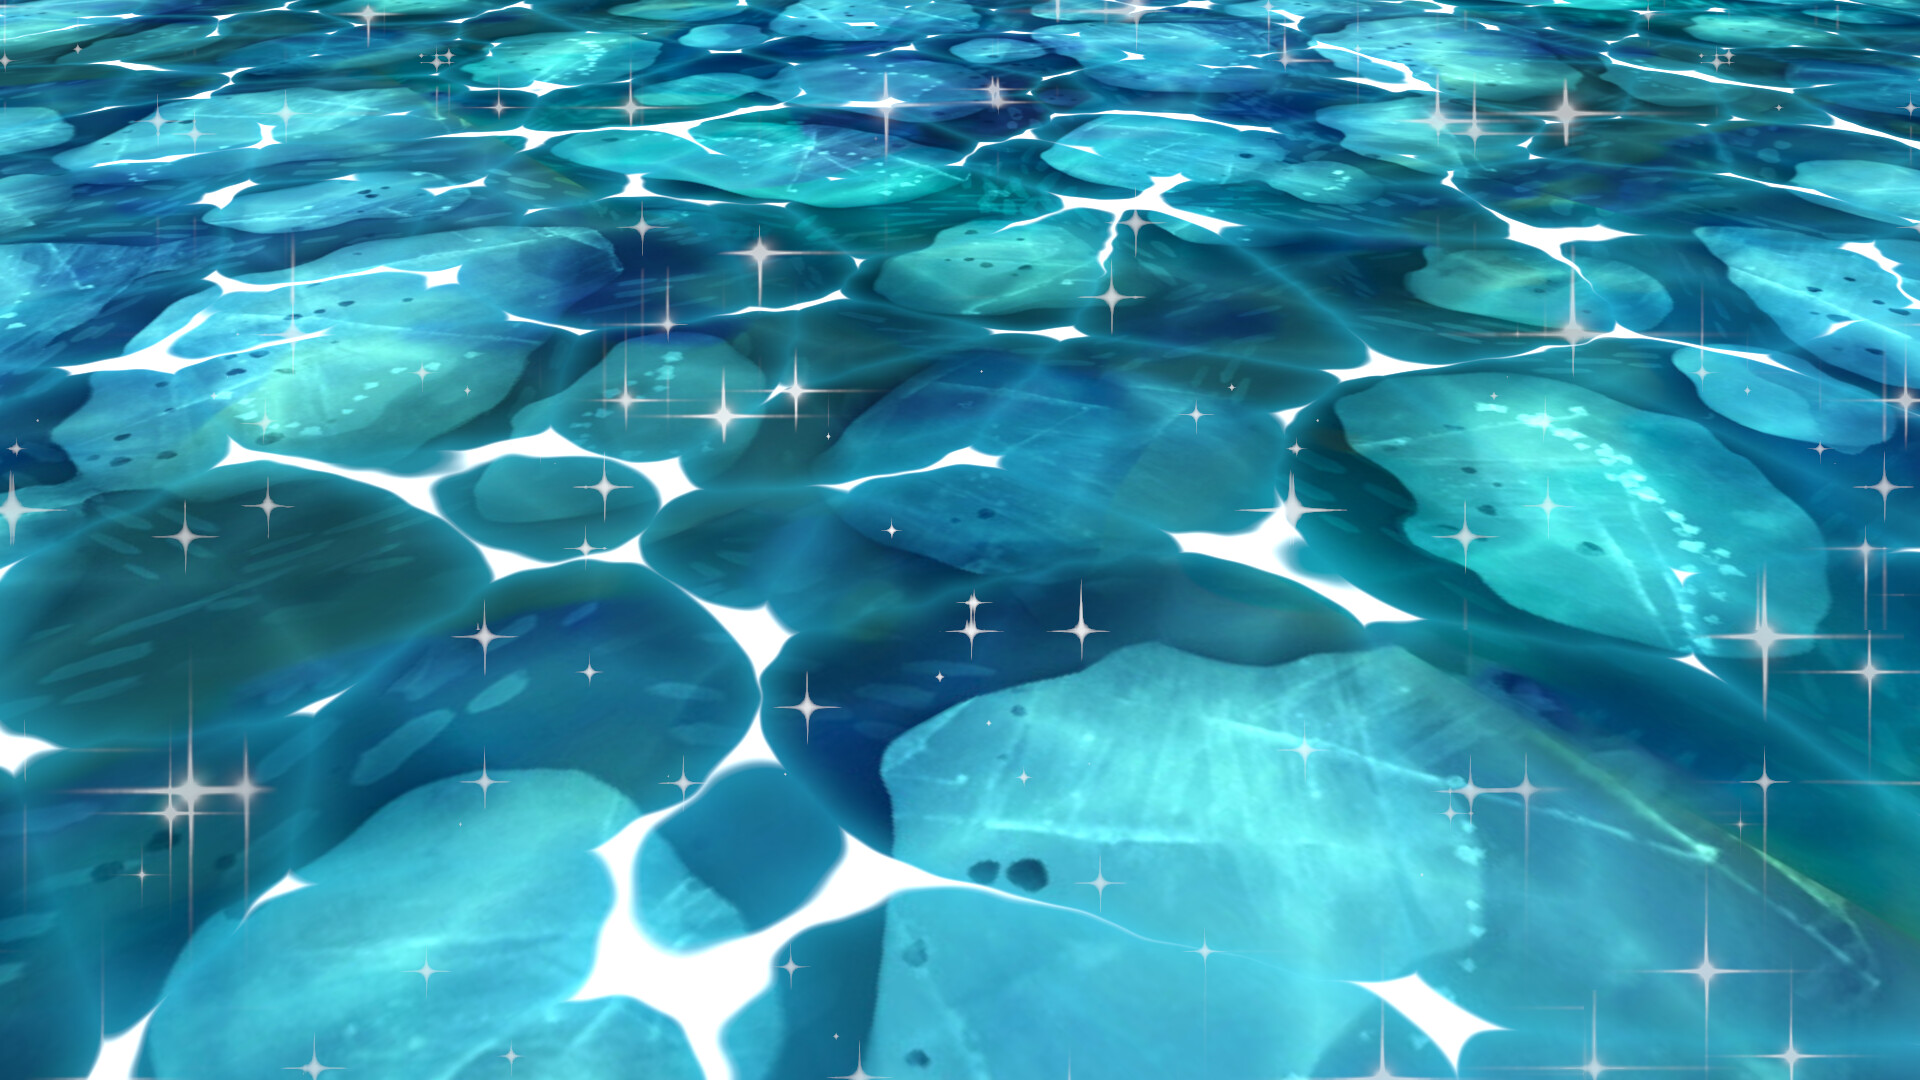 Wallpaper Anime Water Illustration Graphic Design Art Background   Download Free Image